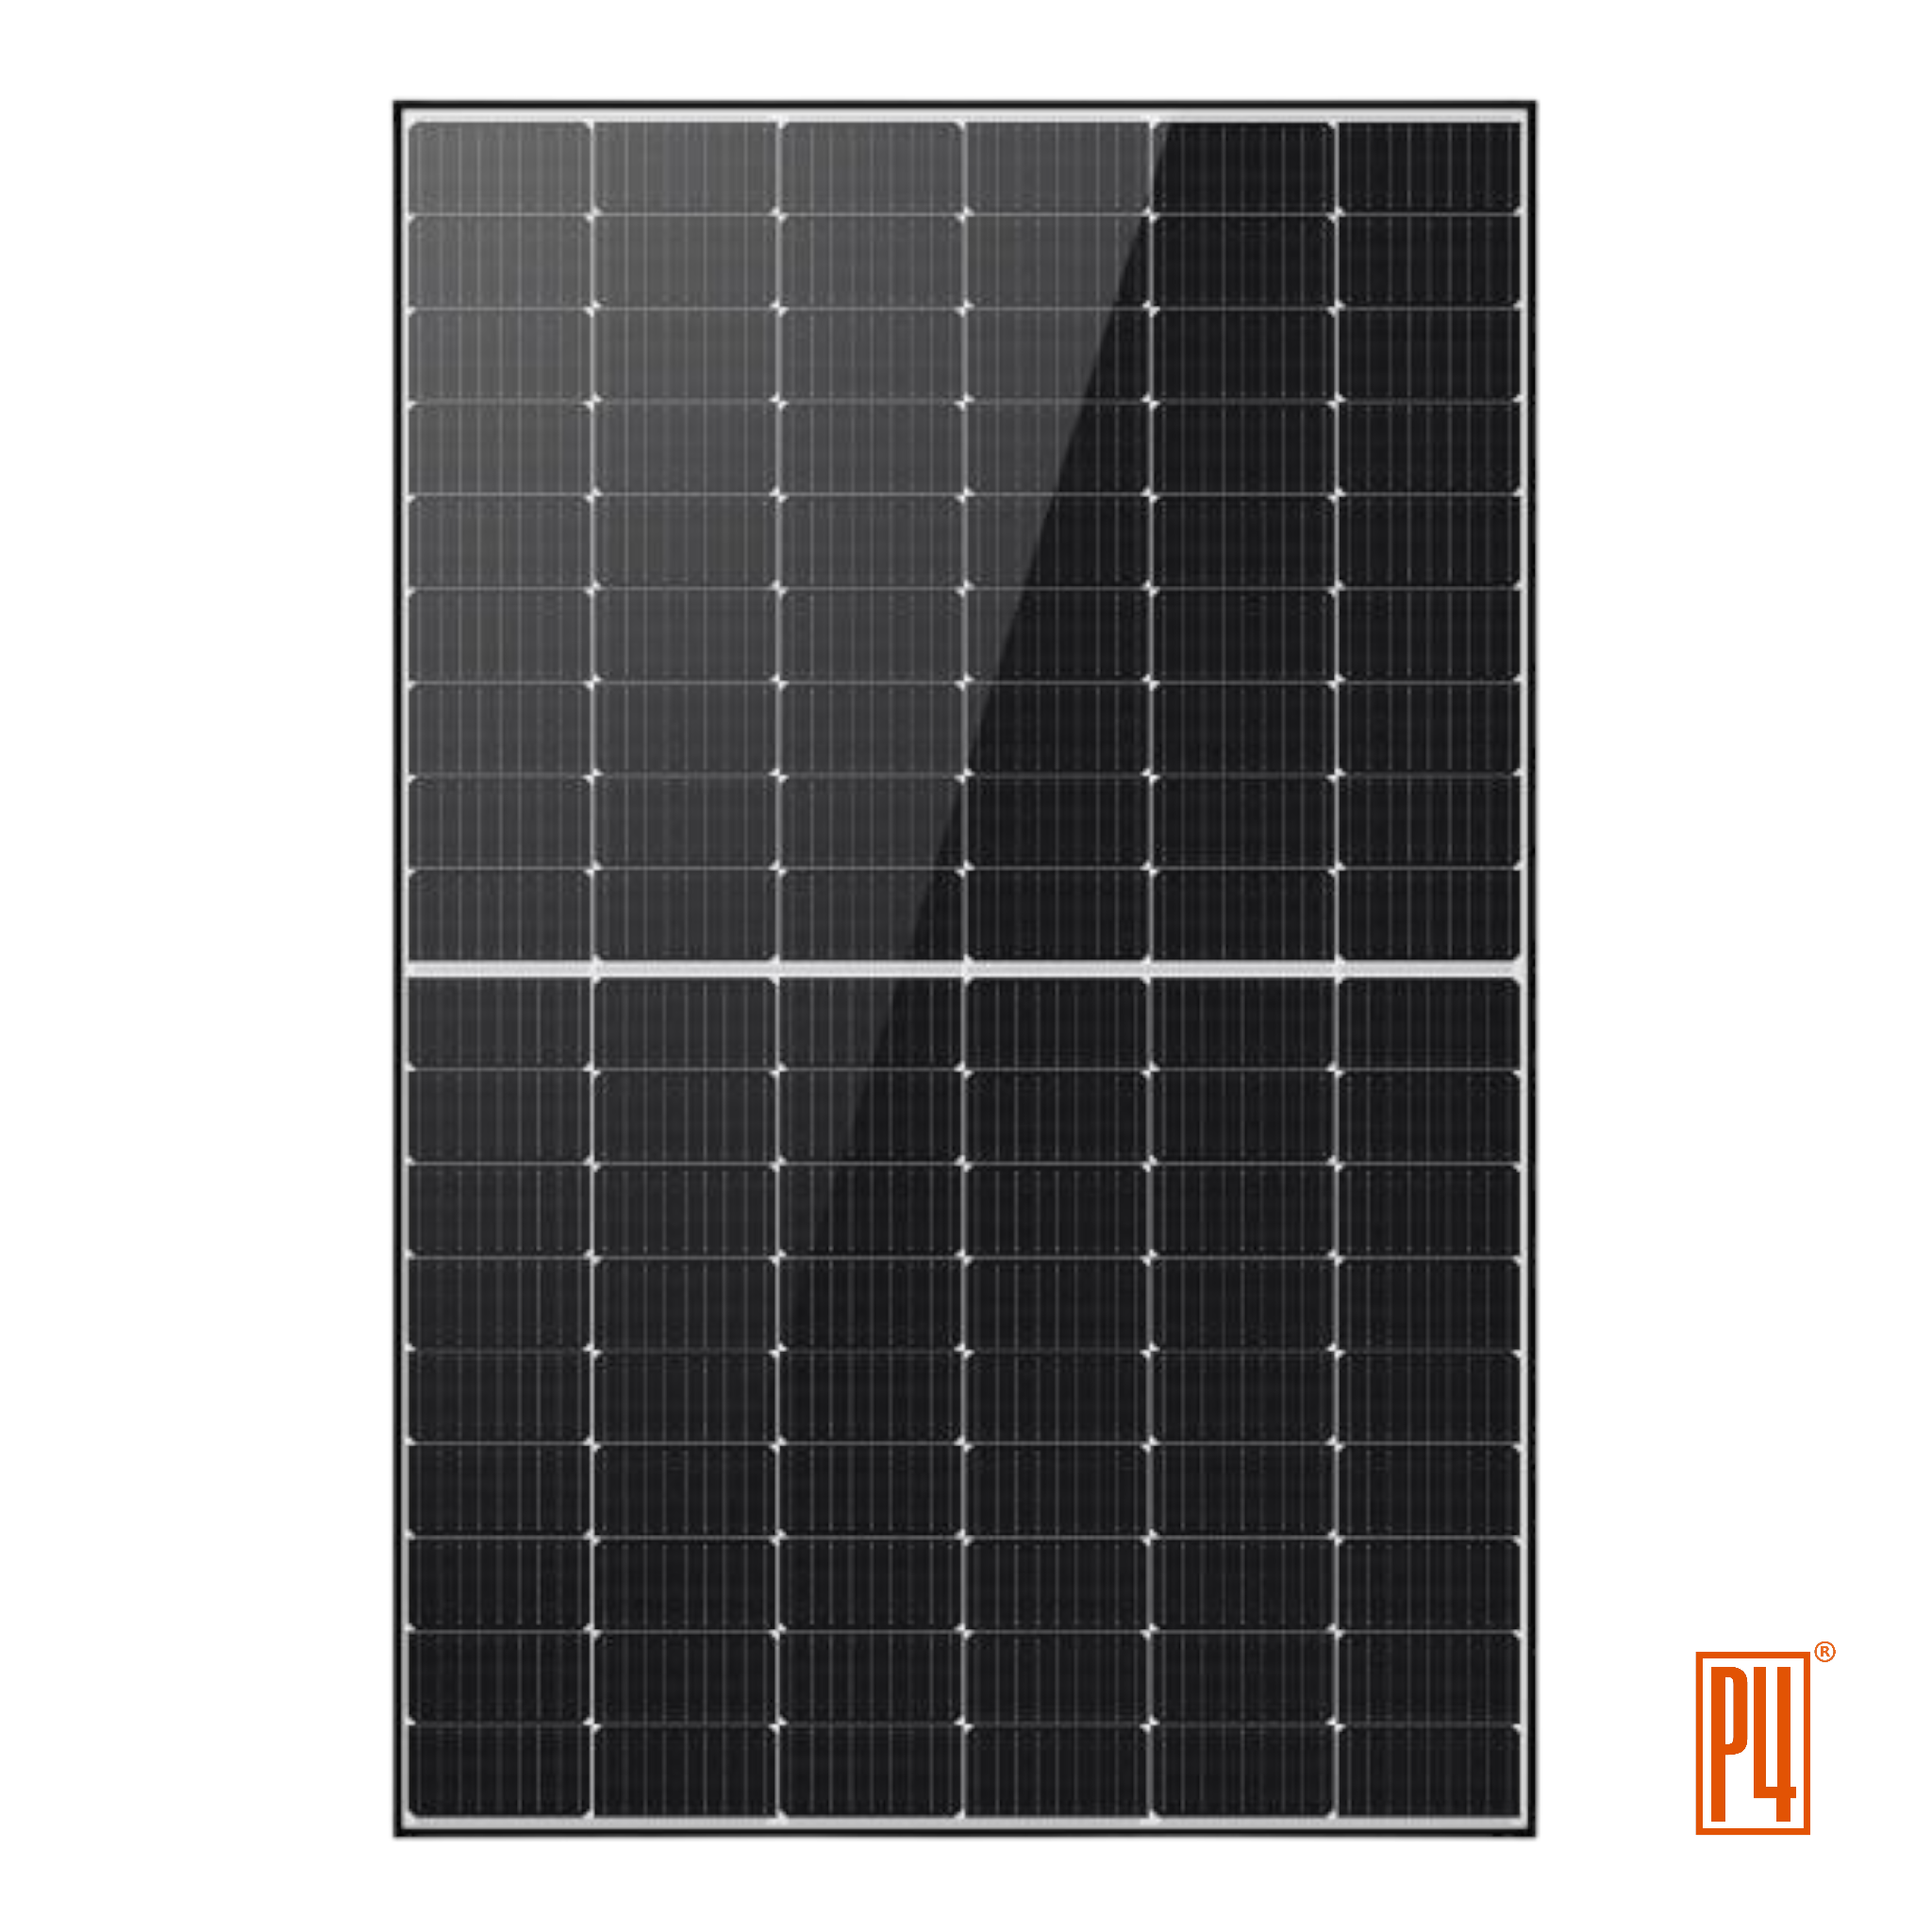 Photovoltaikanlage kaufen Photovoltaik solar shop komplettanlagen balkonkraftwerk mini solaranlage